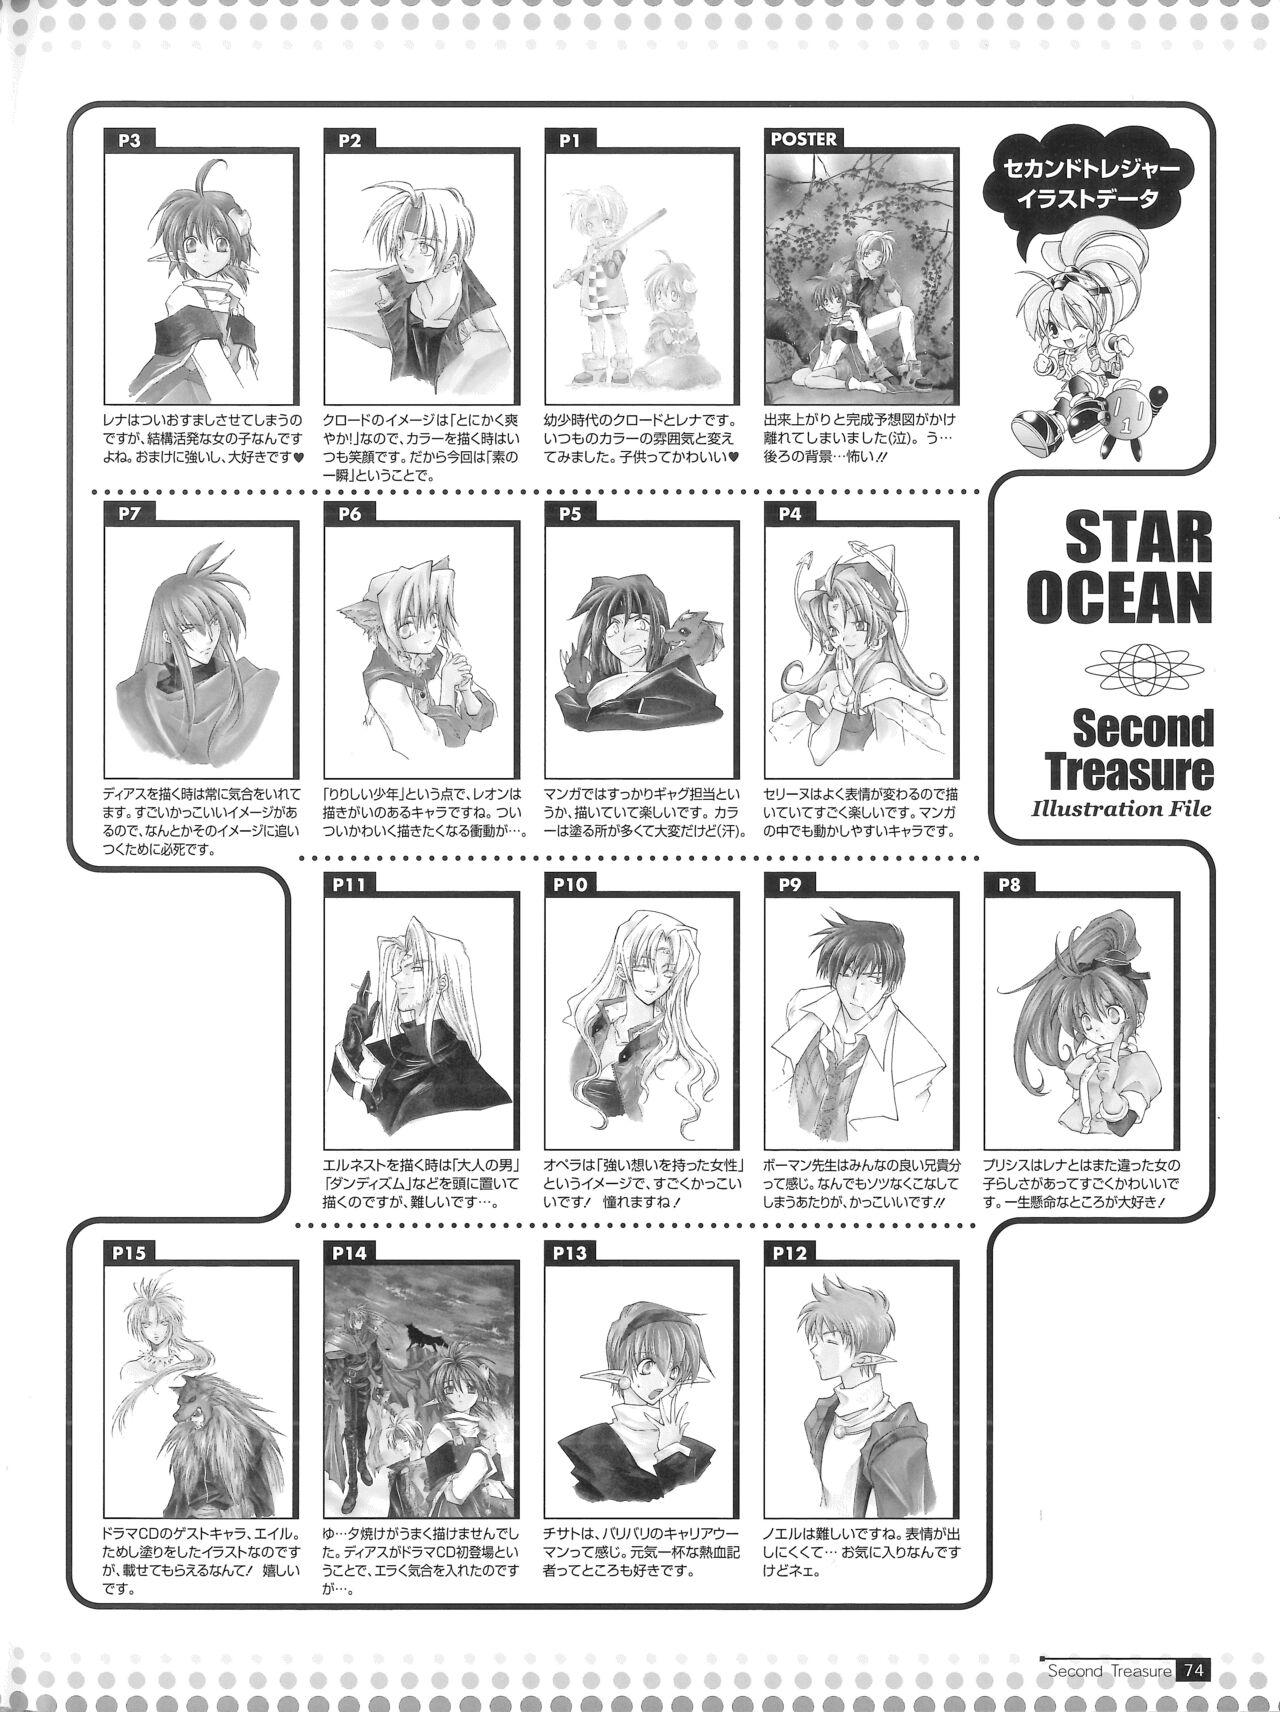 Star Ocean Second Treasure 81